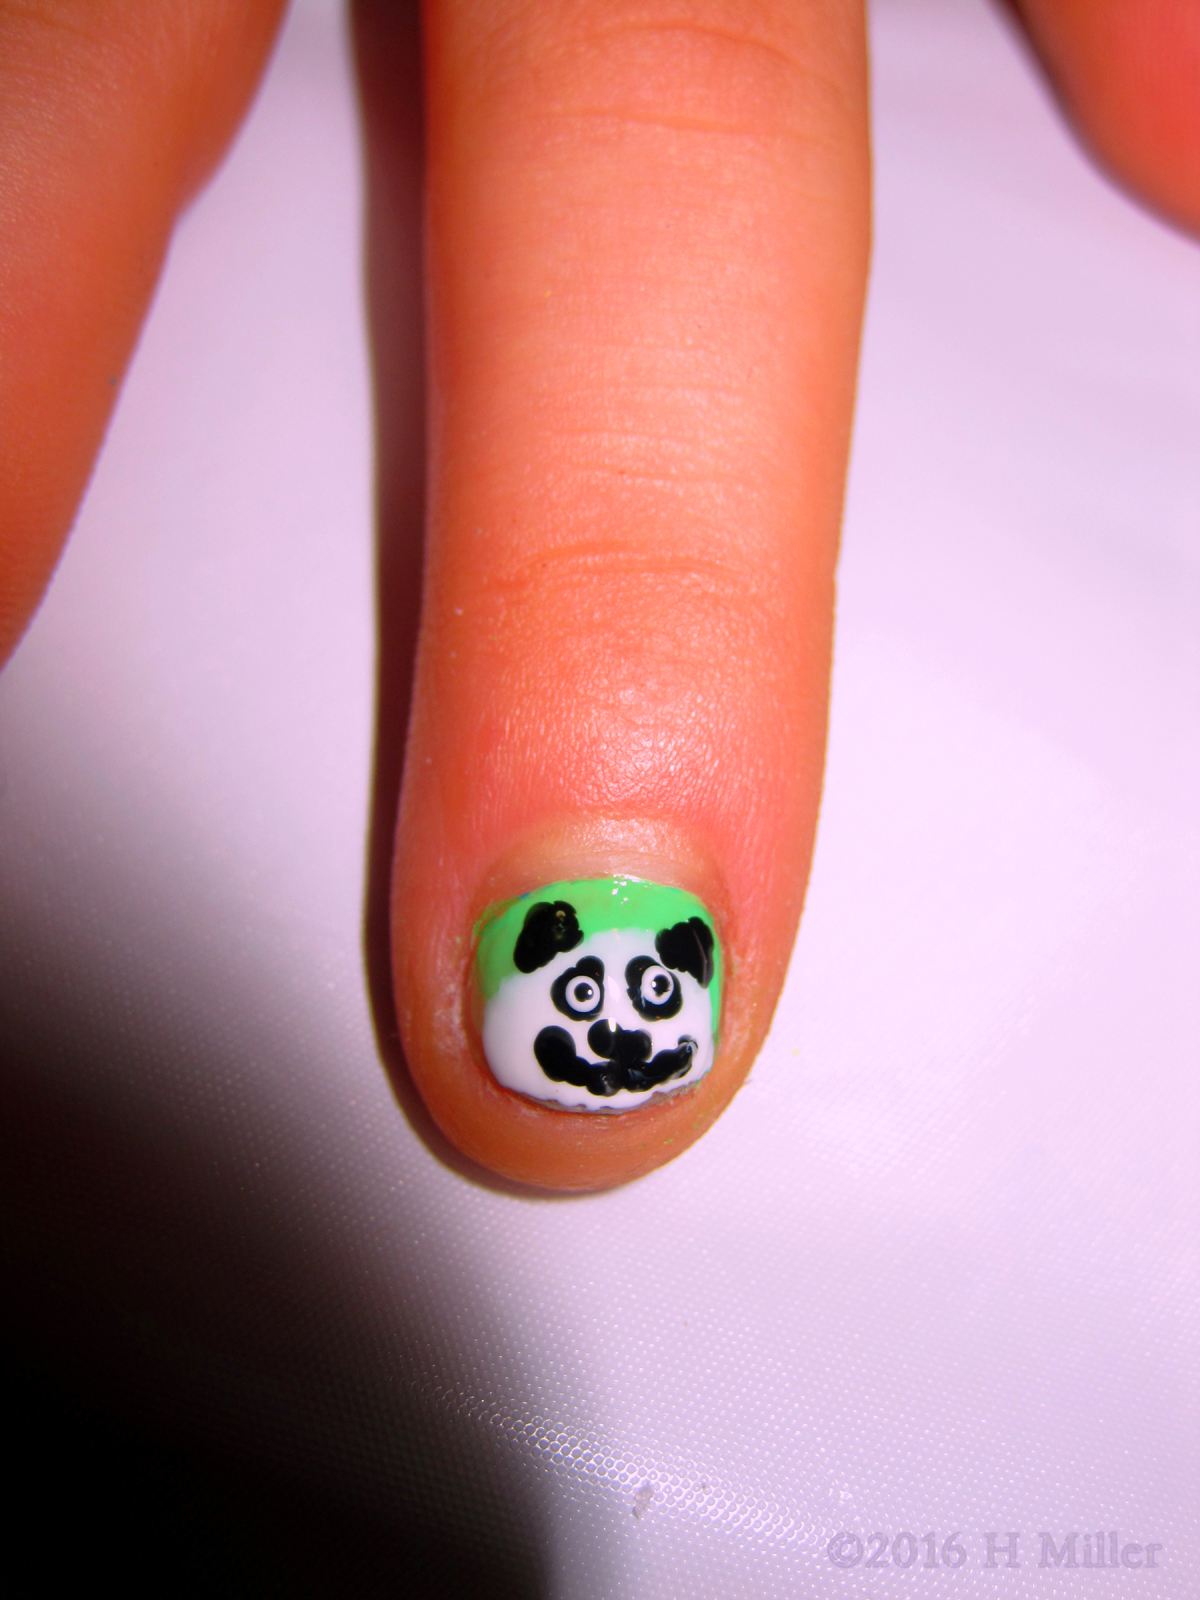 Check Out The Adorable Panda Bear Kids Nail Art! 